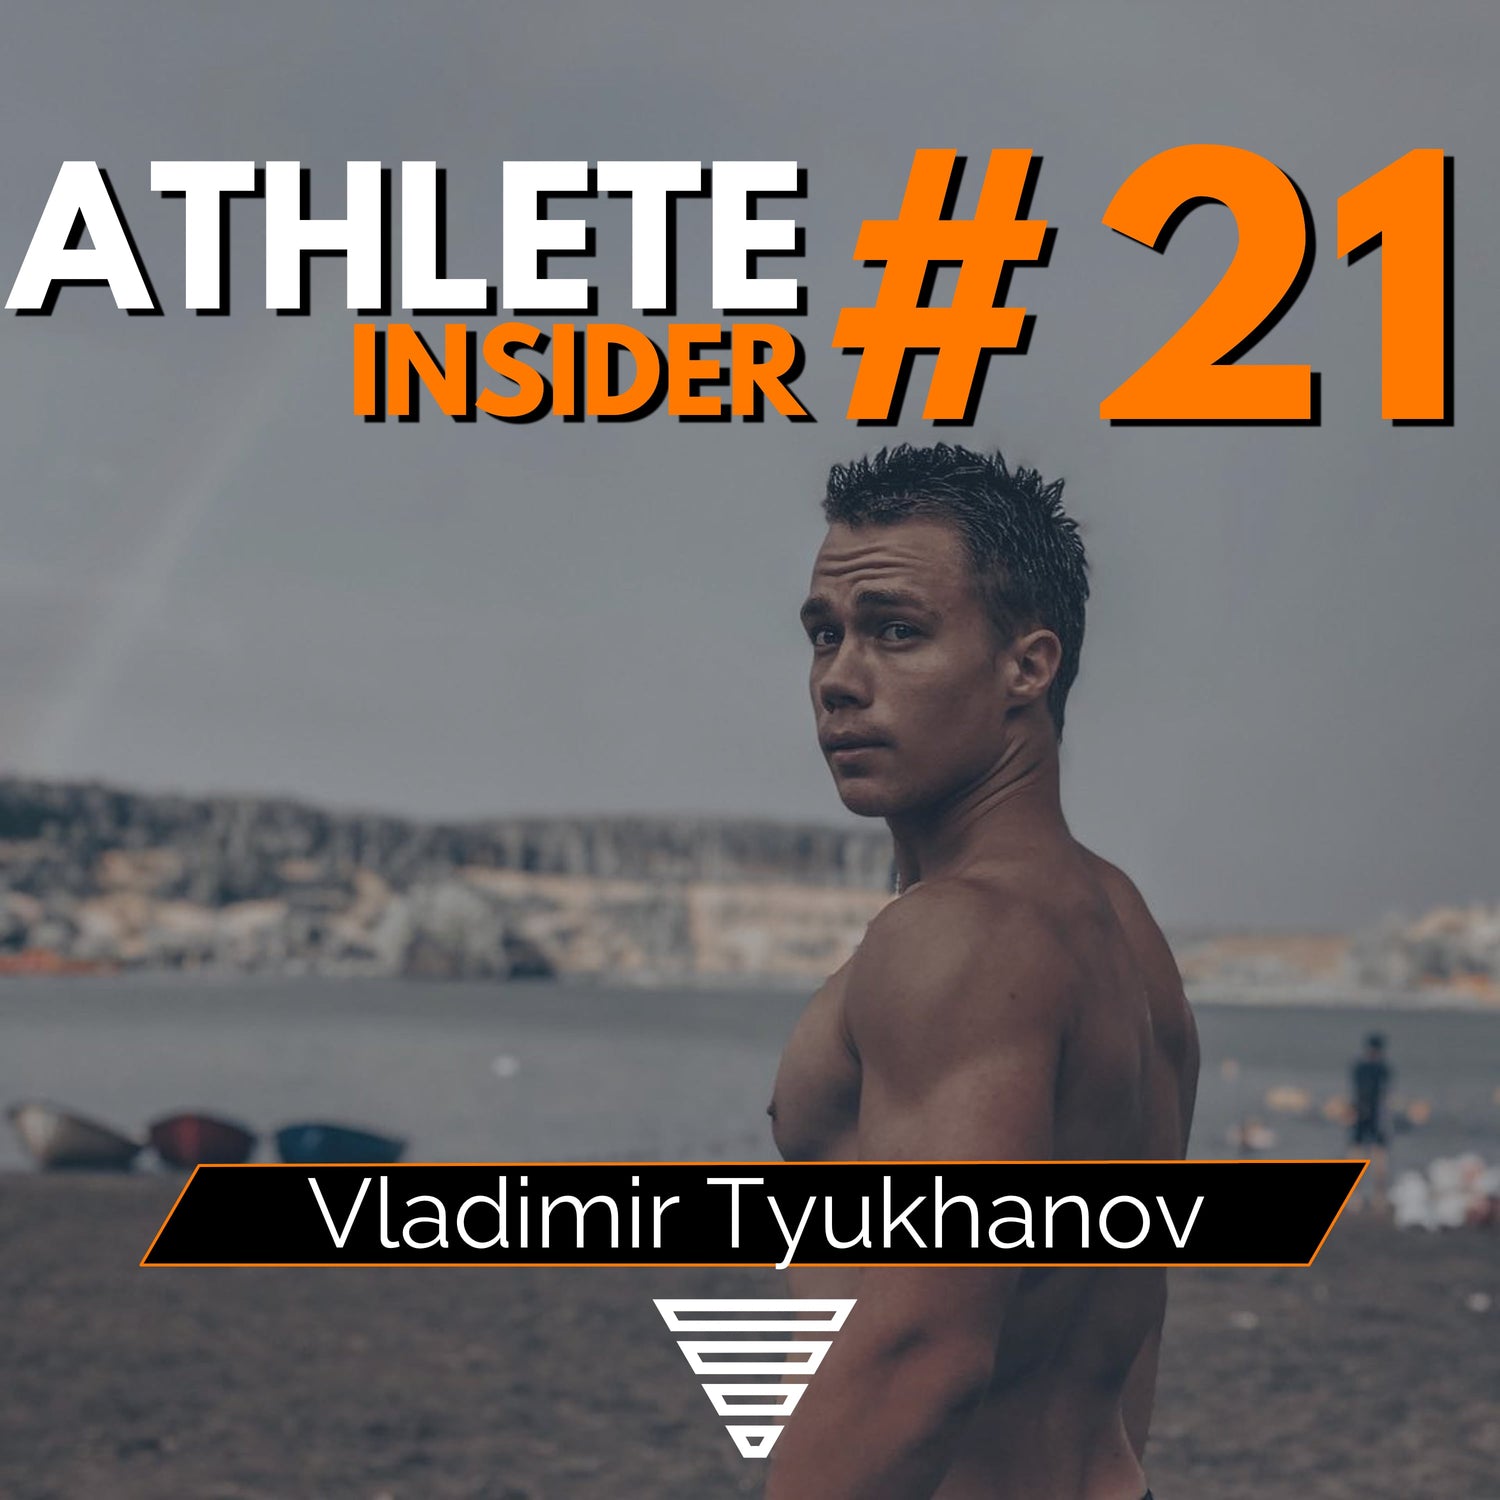 VLADIMIR TYUKHANOV | Learn explosive freestyle | Interview | The Athlete Insider Podcast #21